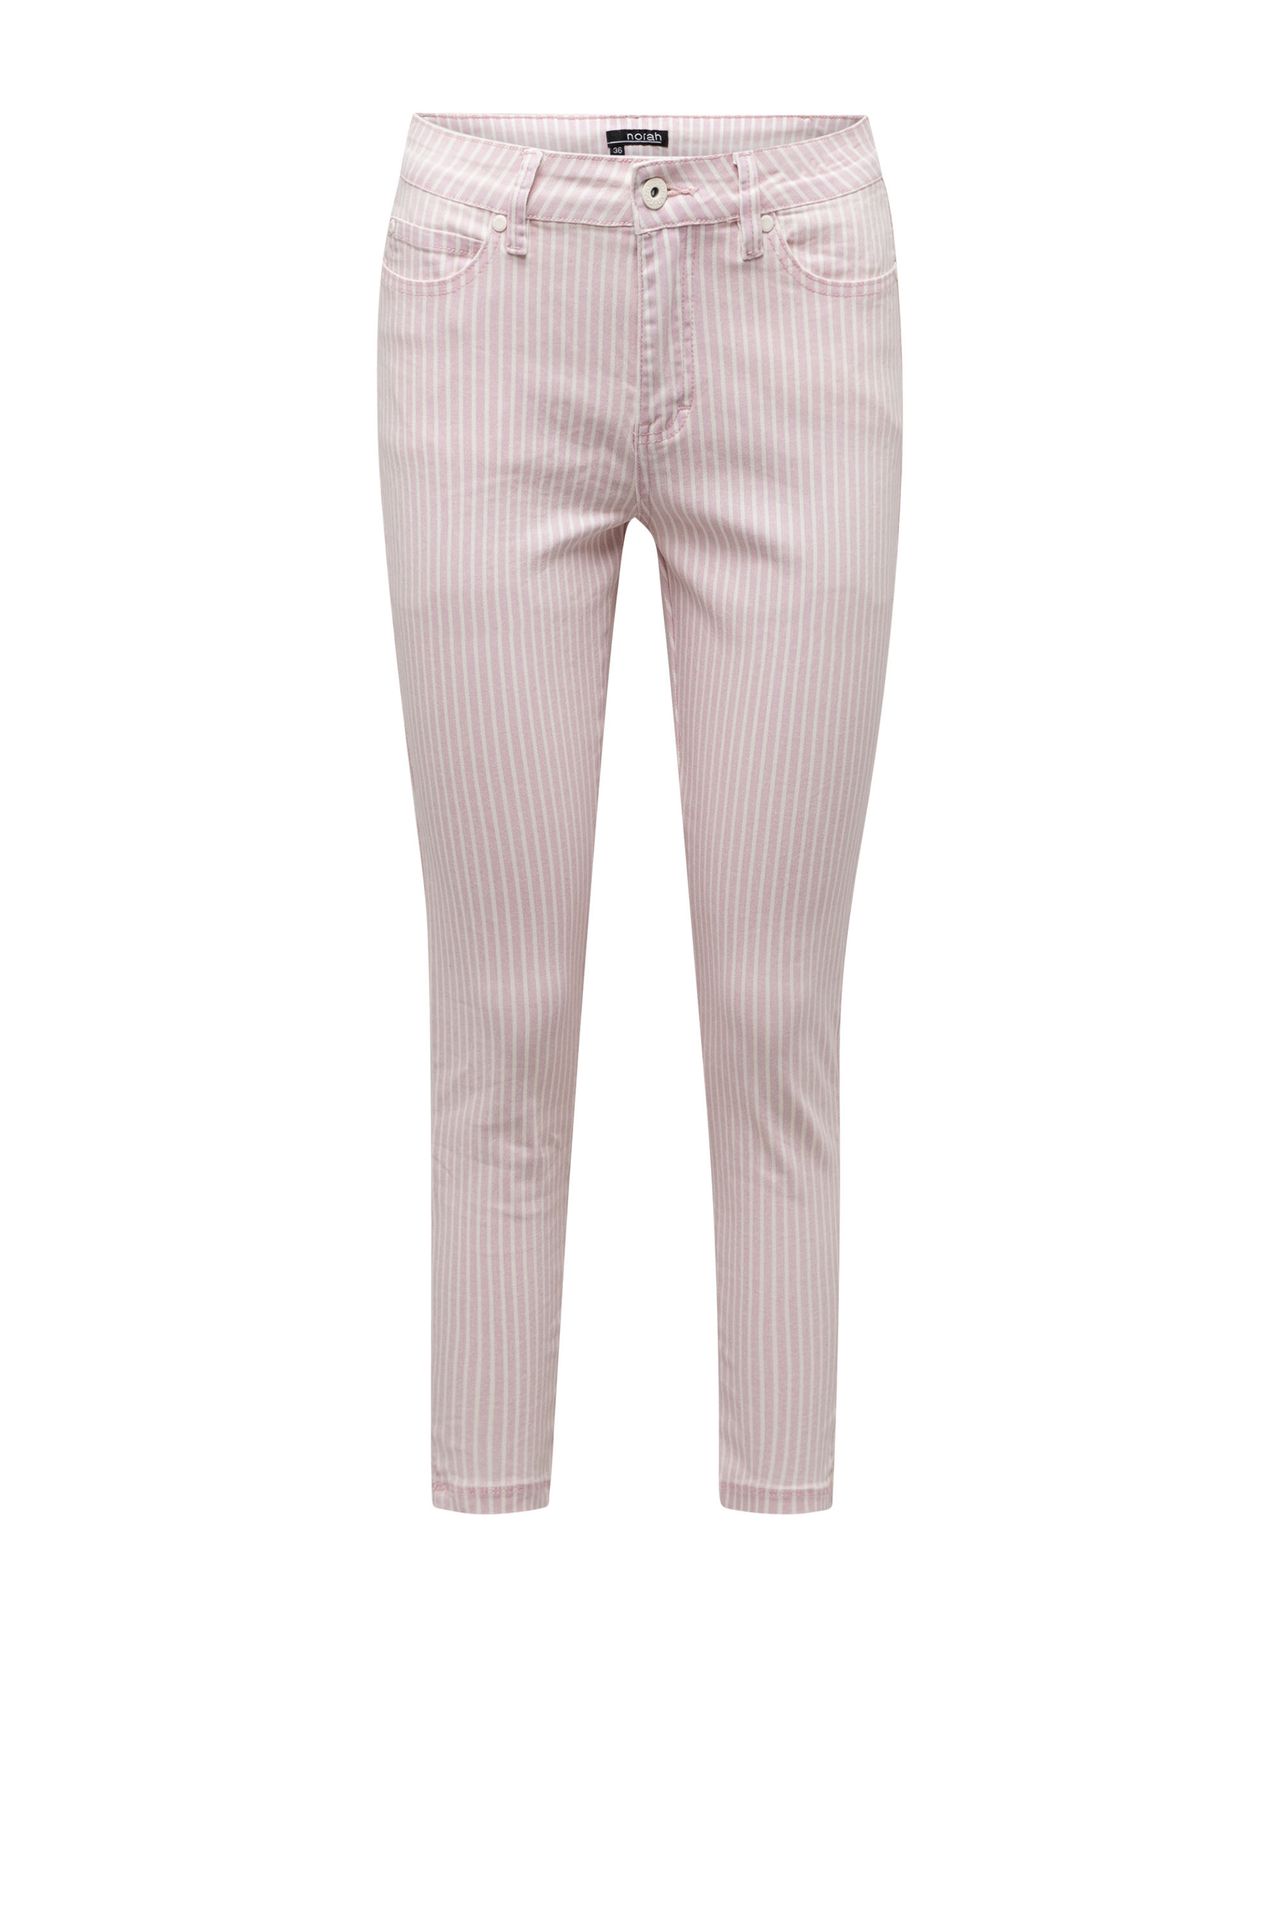 Norah Roze/wit gestreepte broek pink/white 213717-931